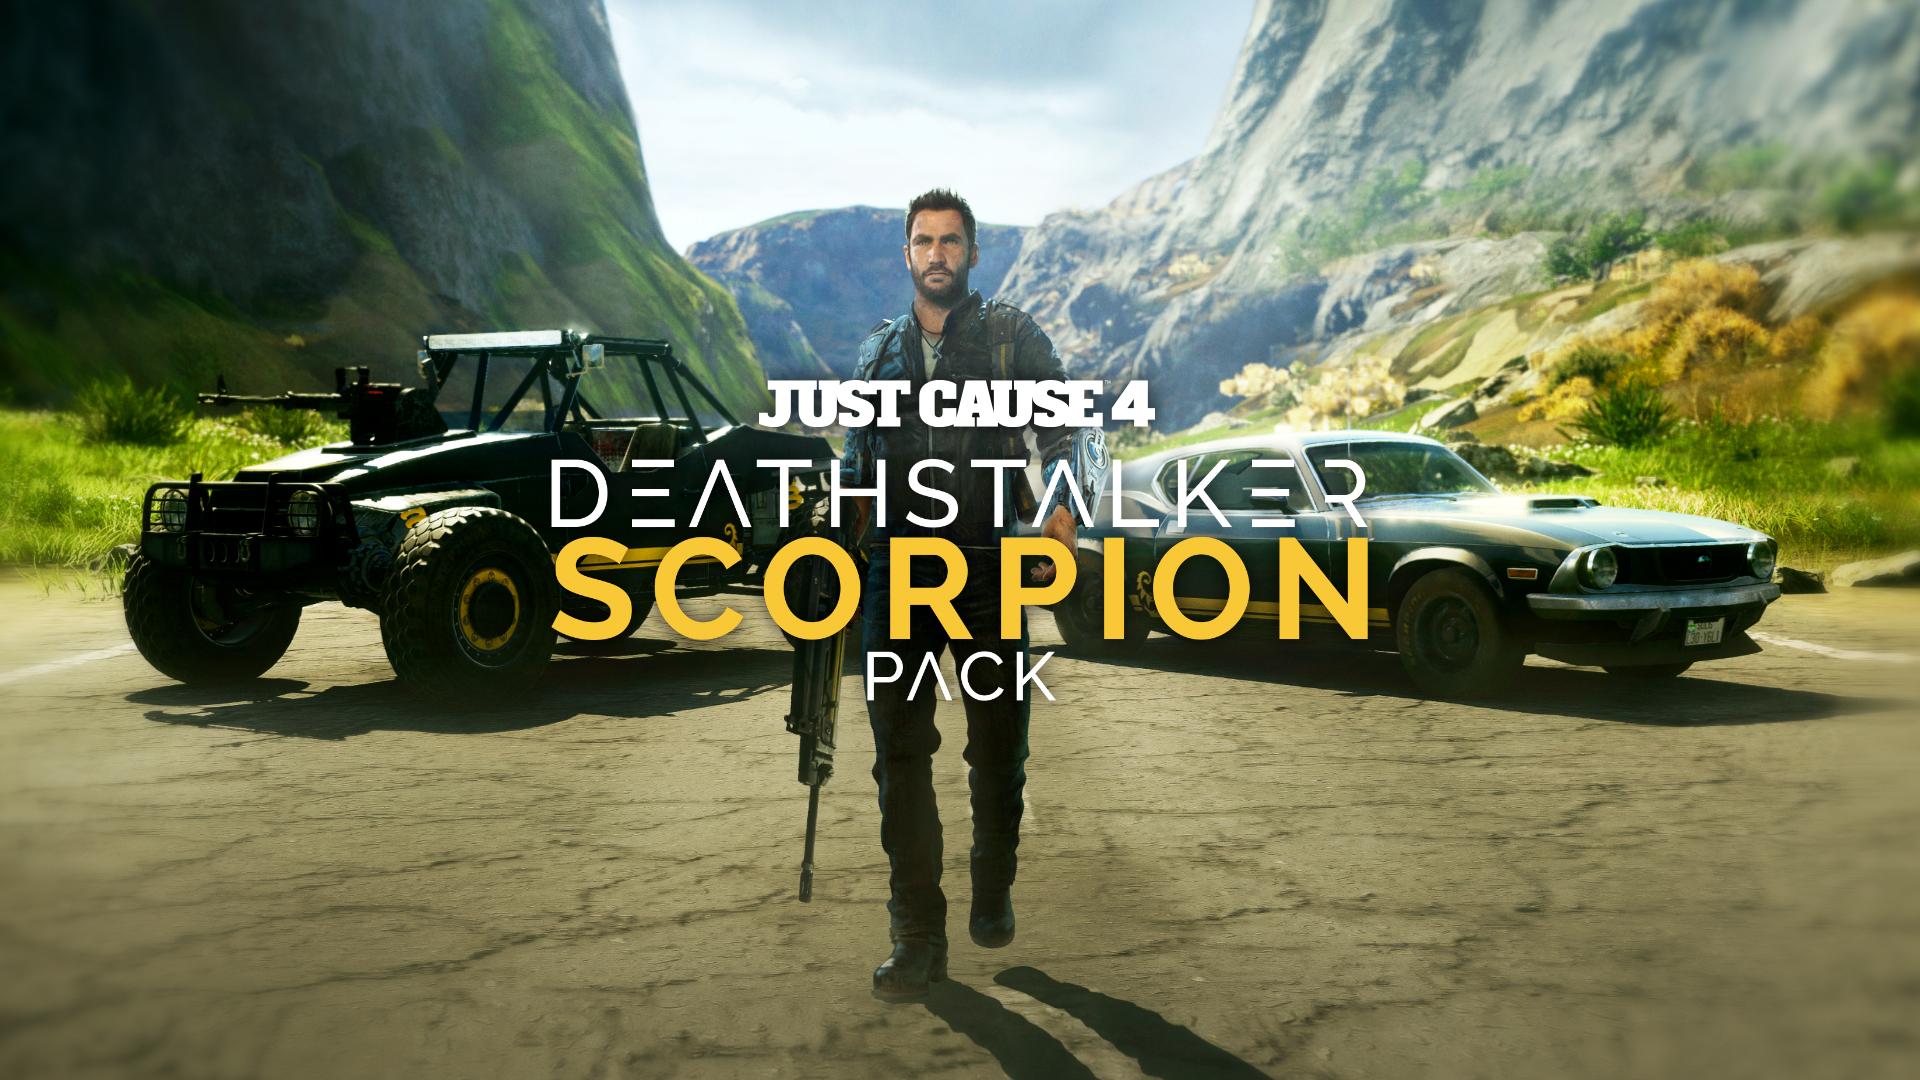 Just Cause™ 4: Deathstalker Scorpion Pack